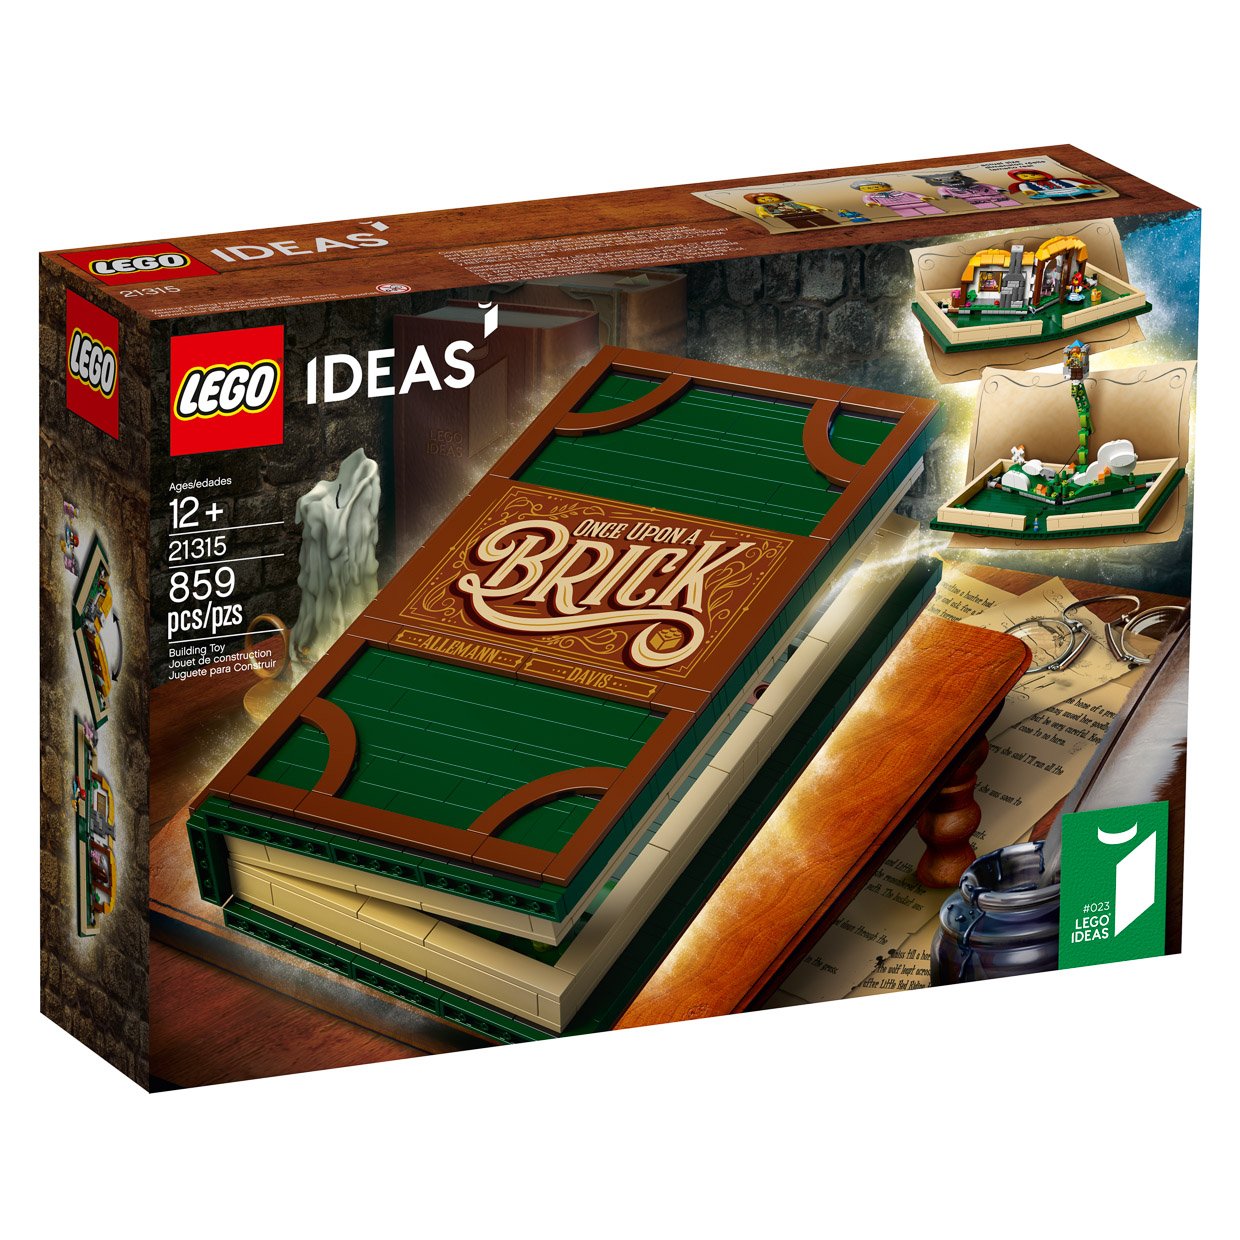 LEGO Ideas Pop-up Book